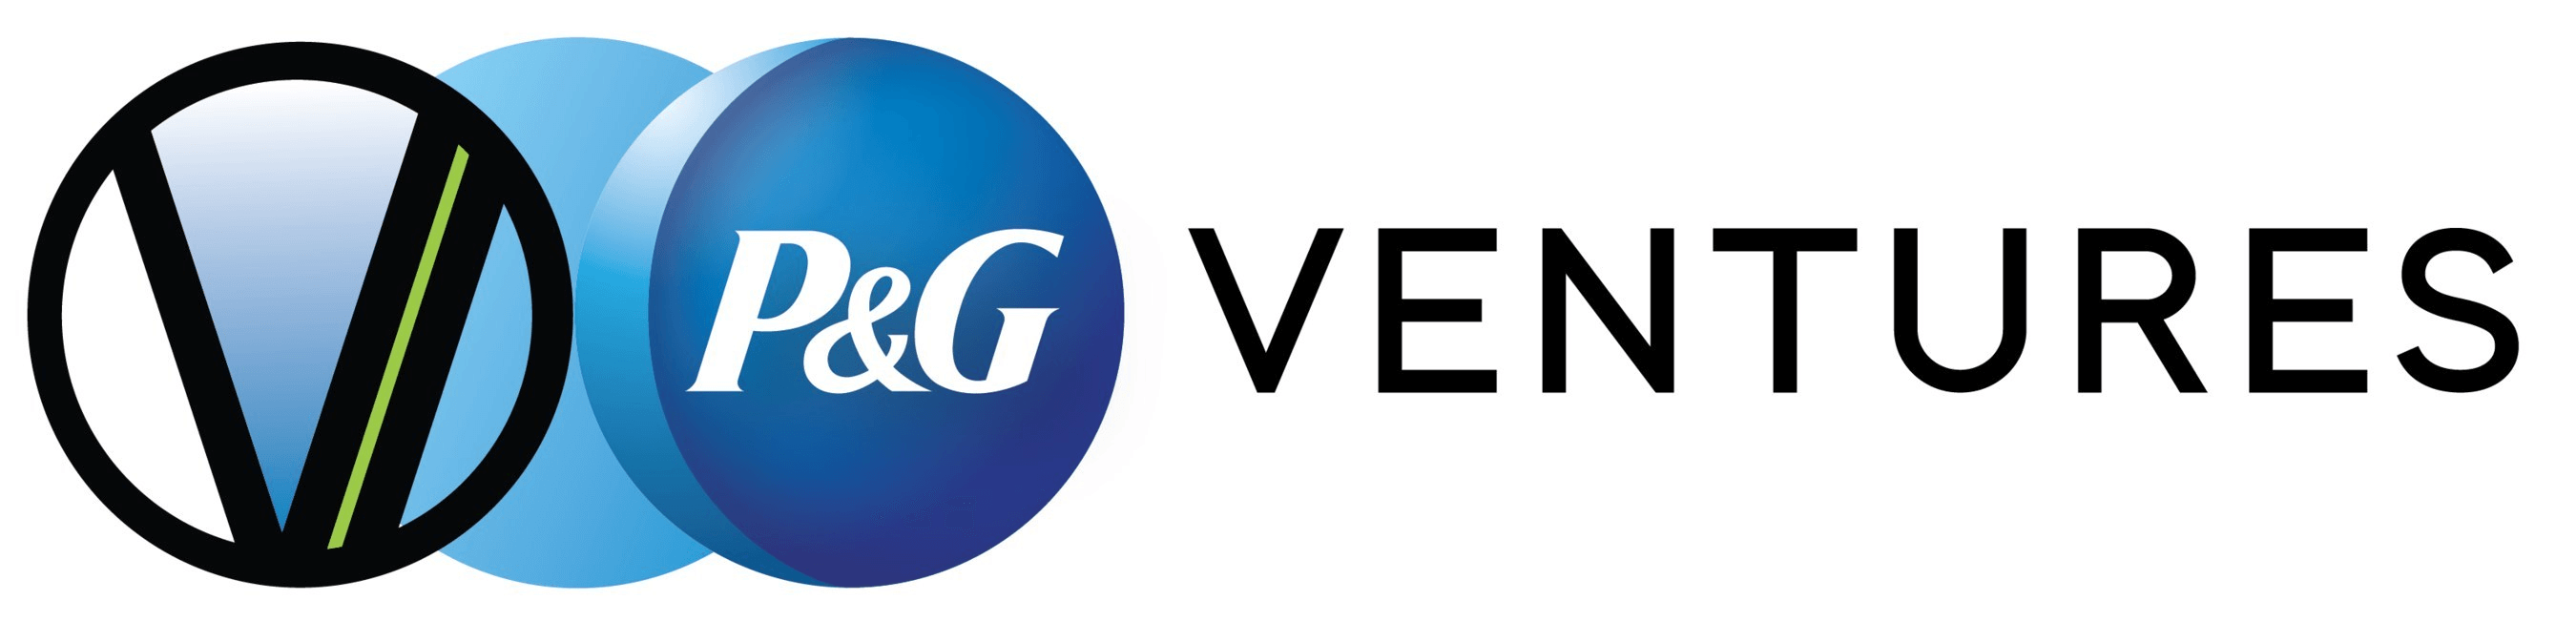 PG Ventures logo